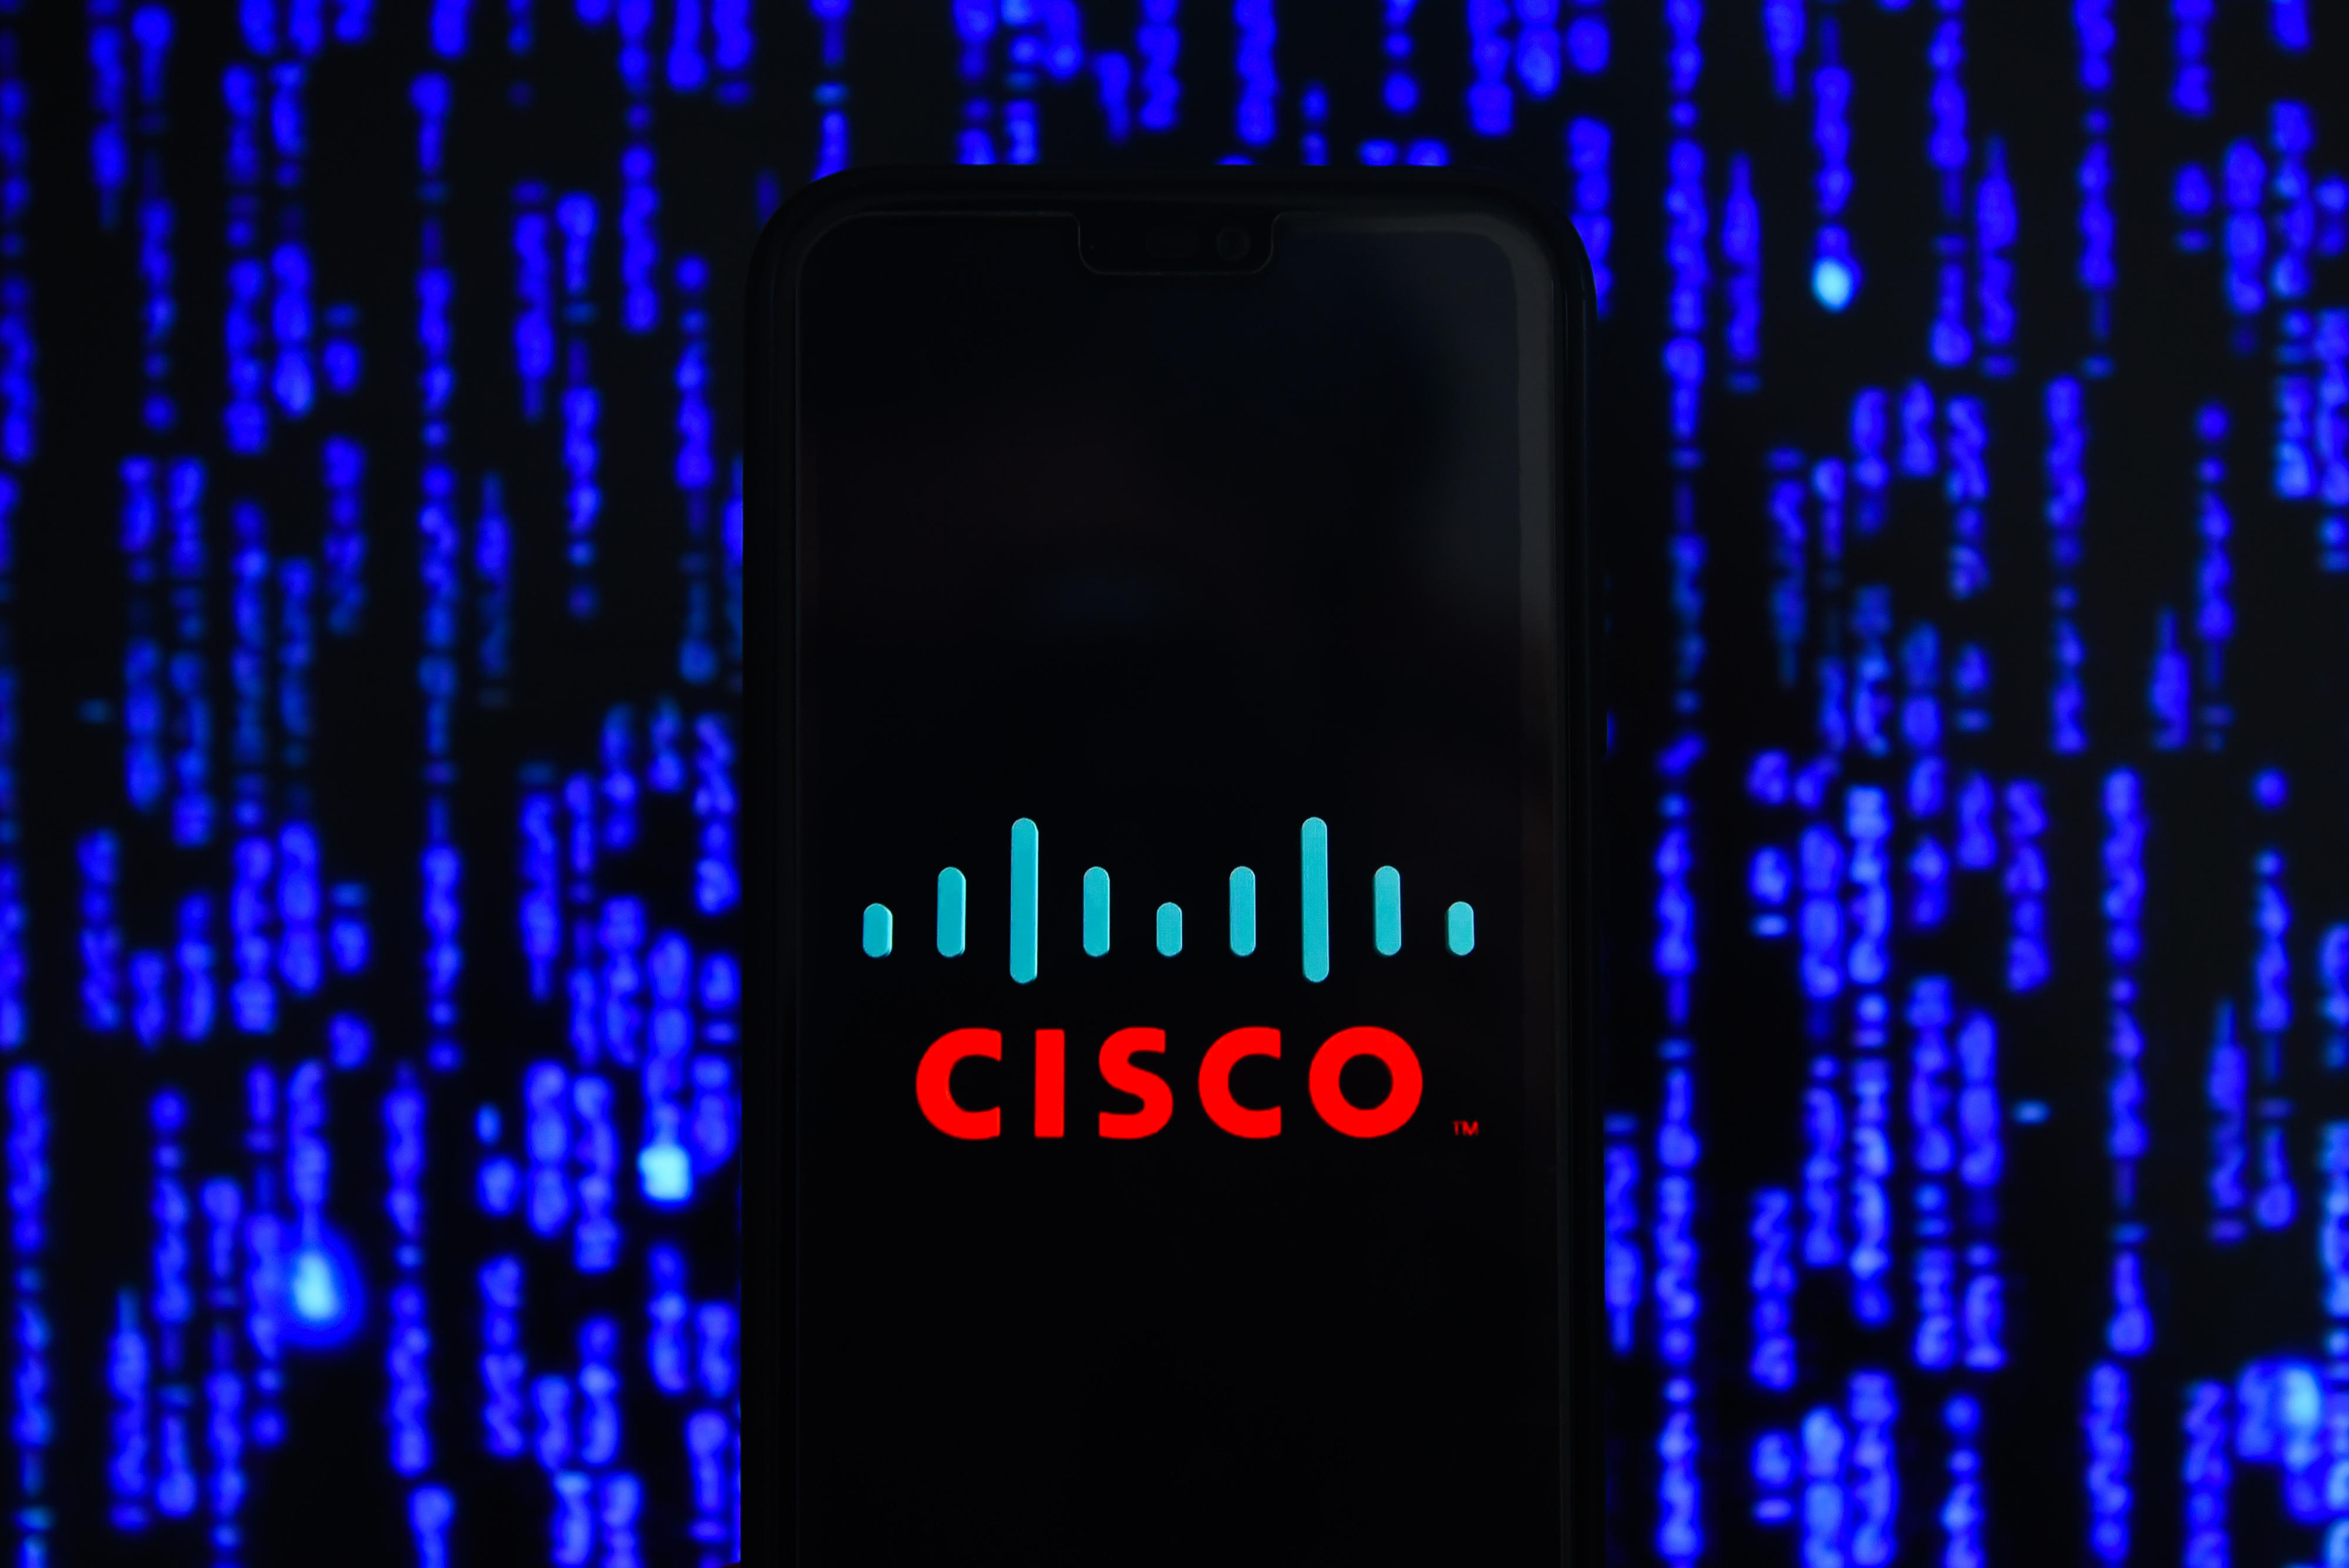 The Cisco logo